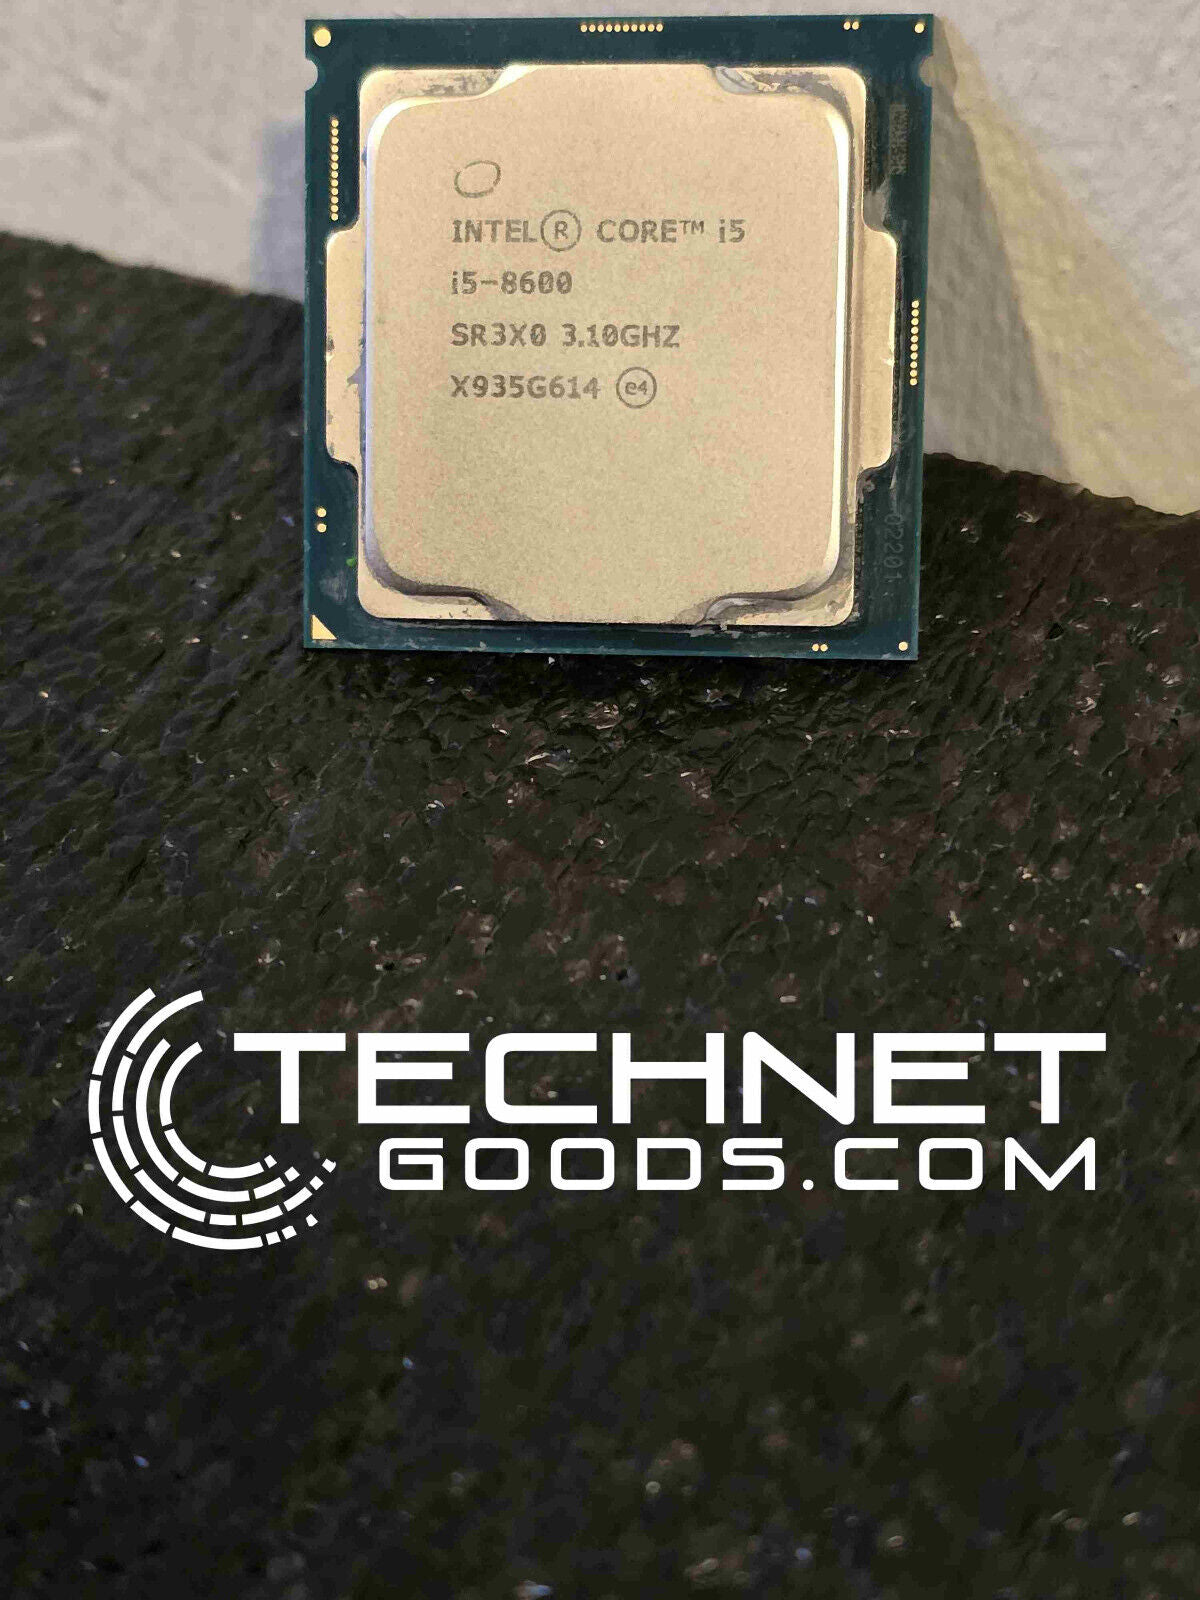 Intel Core i5-8600 3.1 GHz (4.3GHz TURBO) LGA 1151 Processor (SR3X0) - TESTED